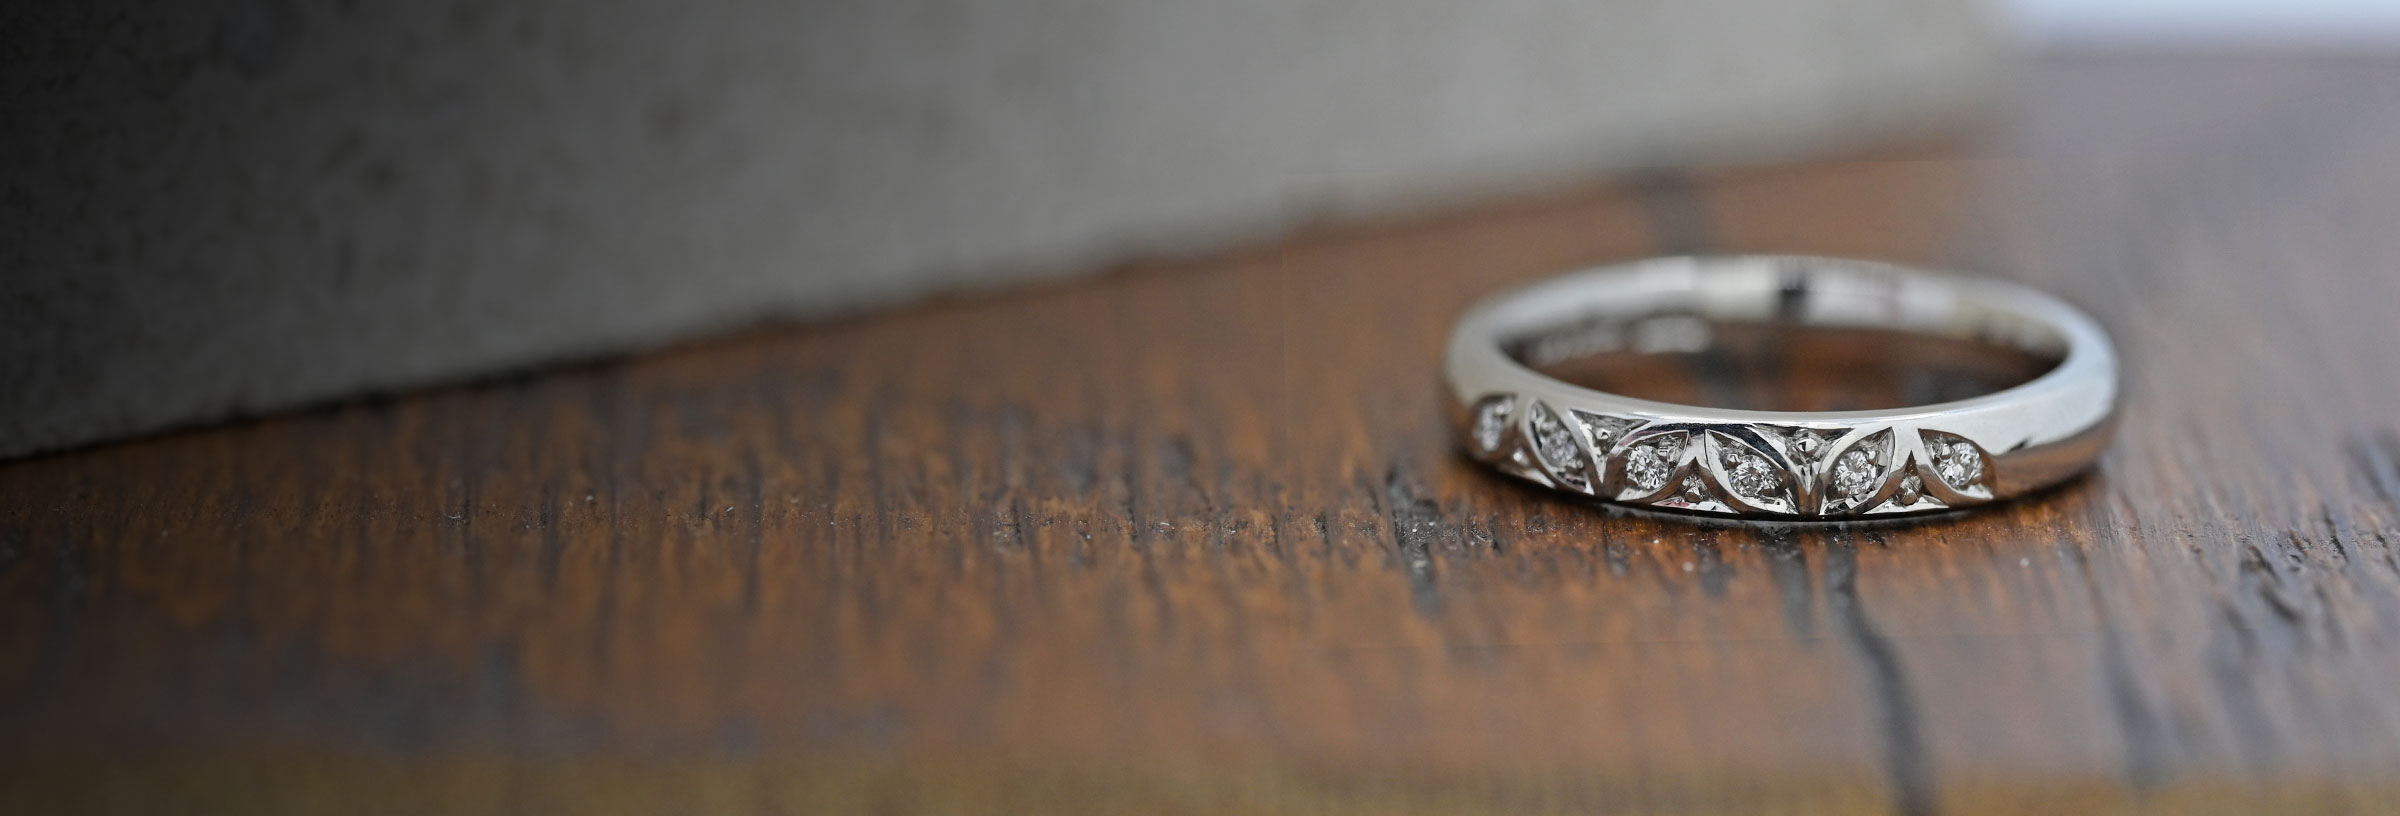 platinum-eternity-ring-with-brilliant-cut-diamonds-and-decorative-beading